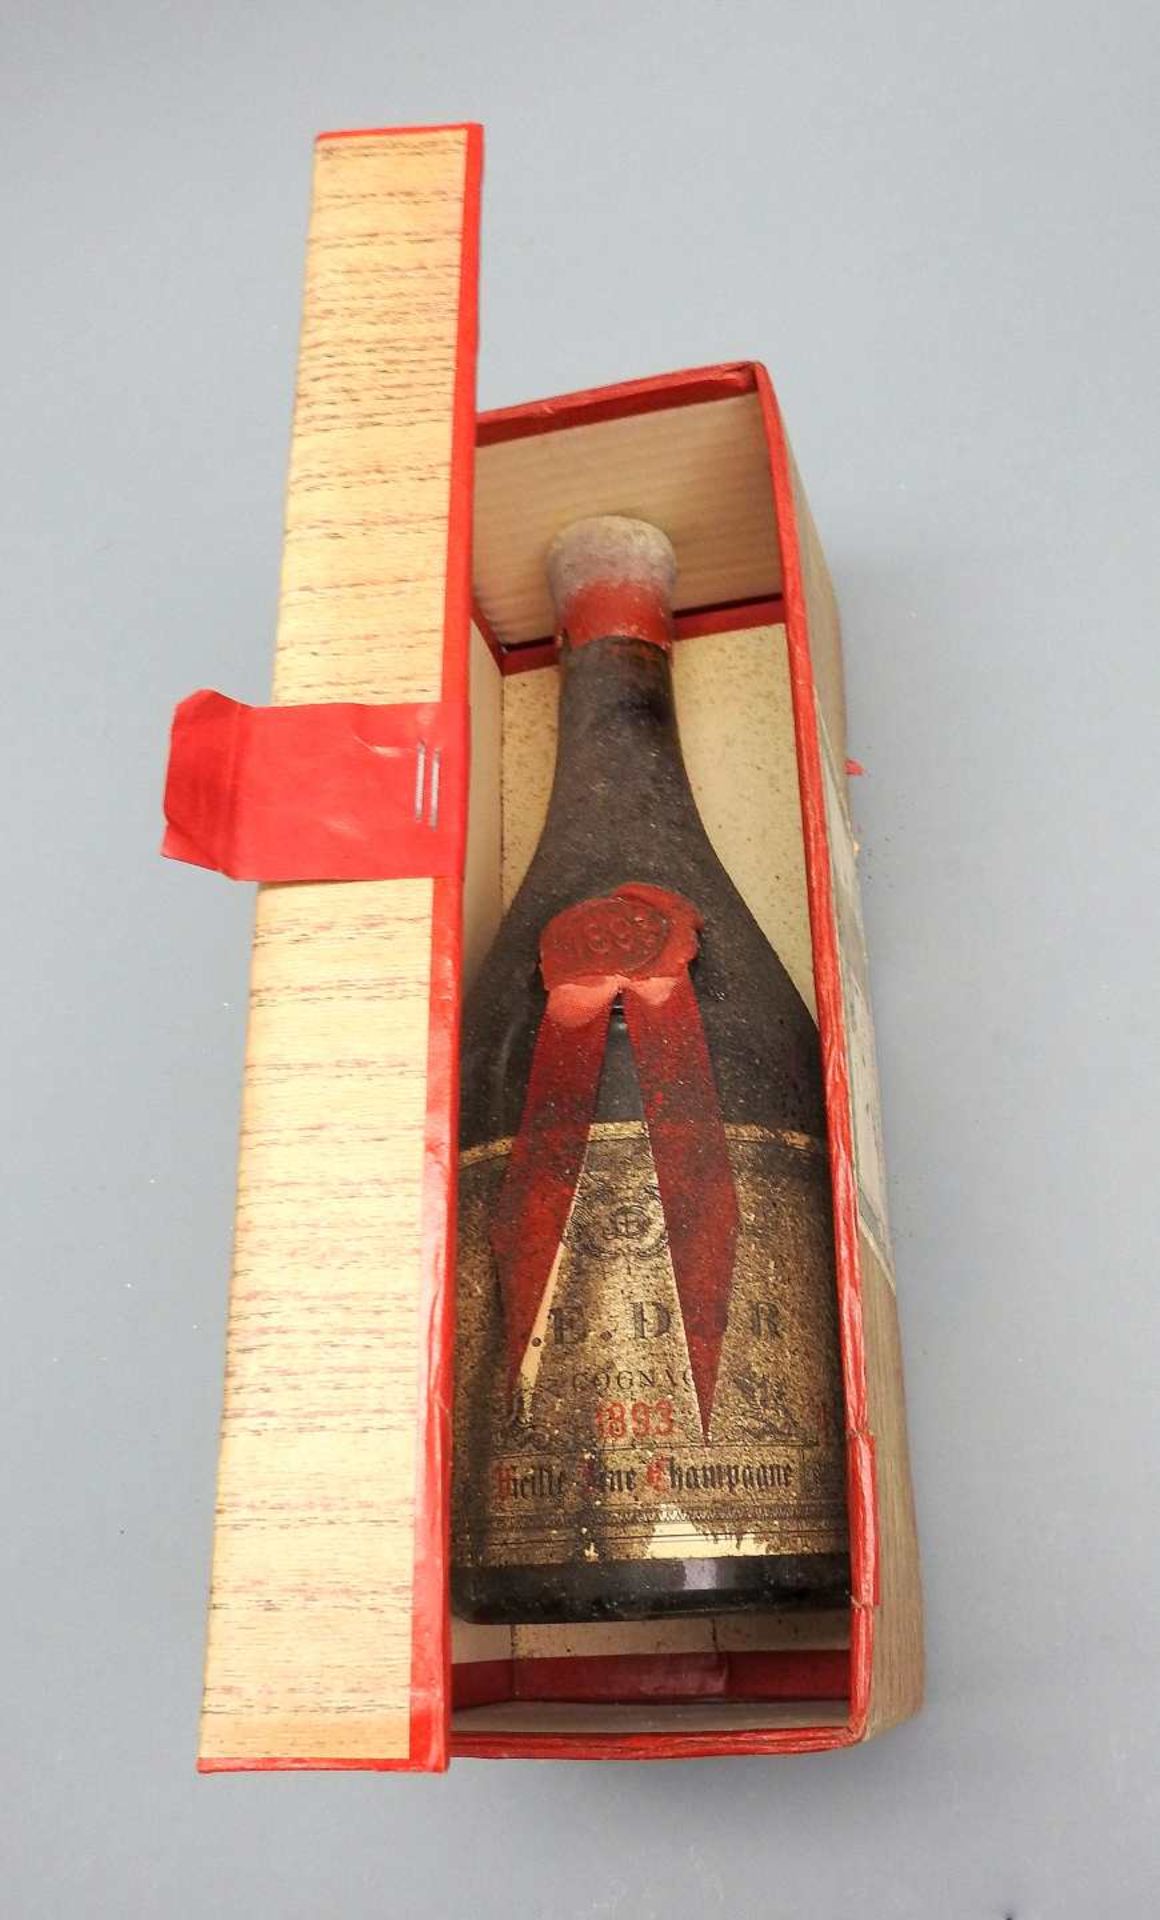 A.E. Dor, CognacVieille Fine Champagne. Inhalt wohl 700 ml, Jahrgang 1893: Destillerie - Image 3 of 5